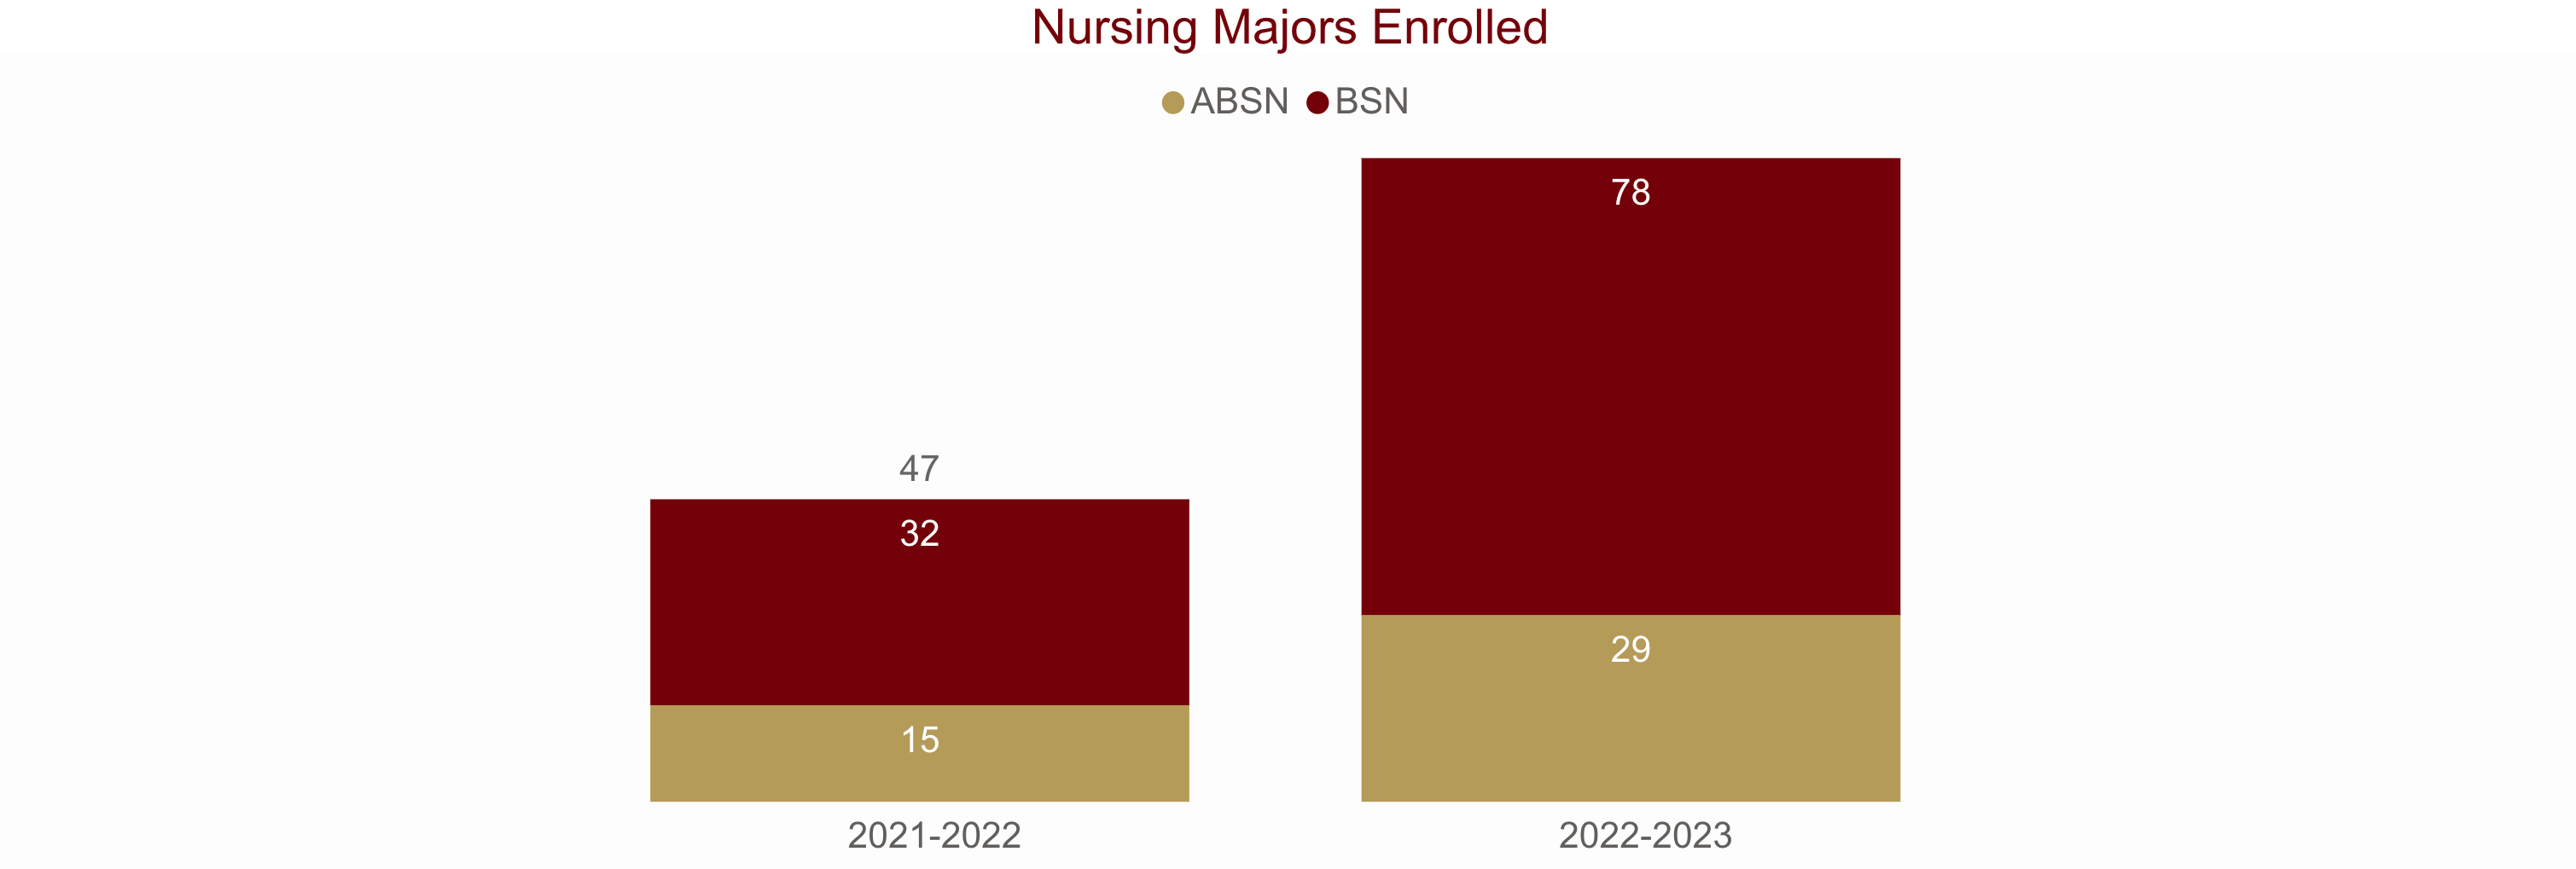 Bar chart showing the number of nursing majors enrolled